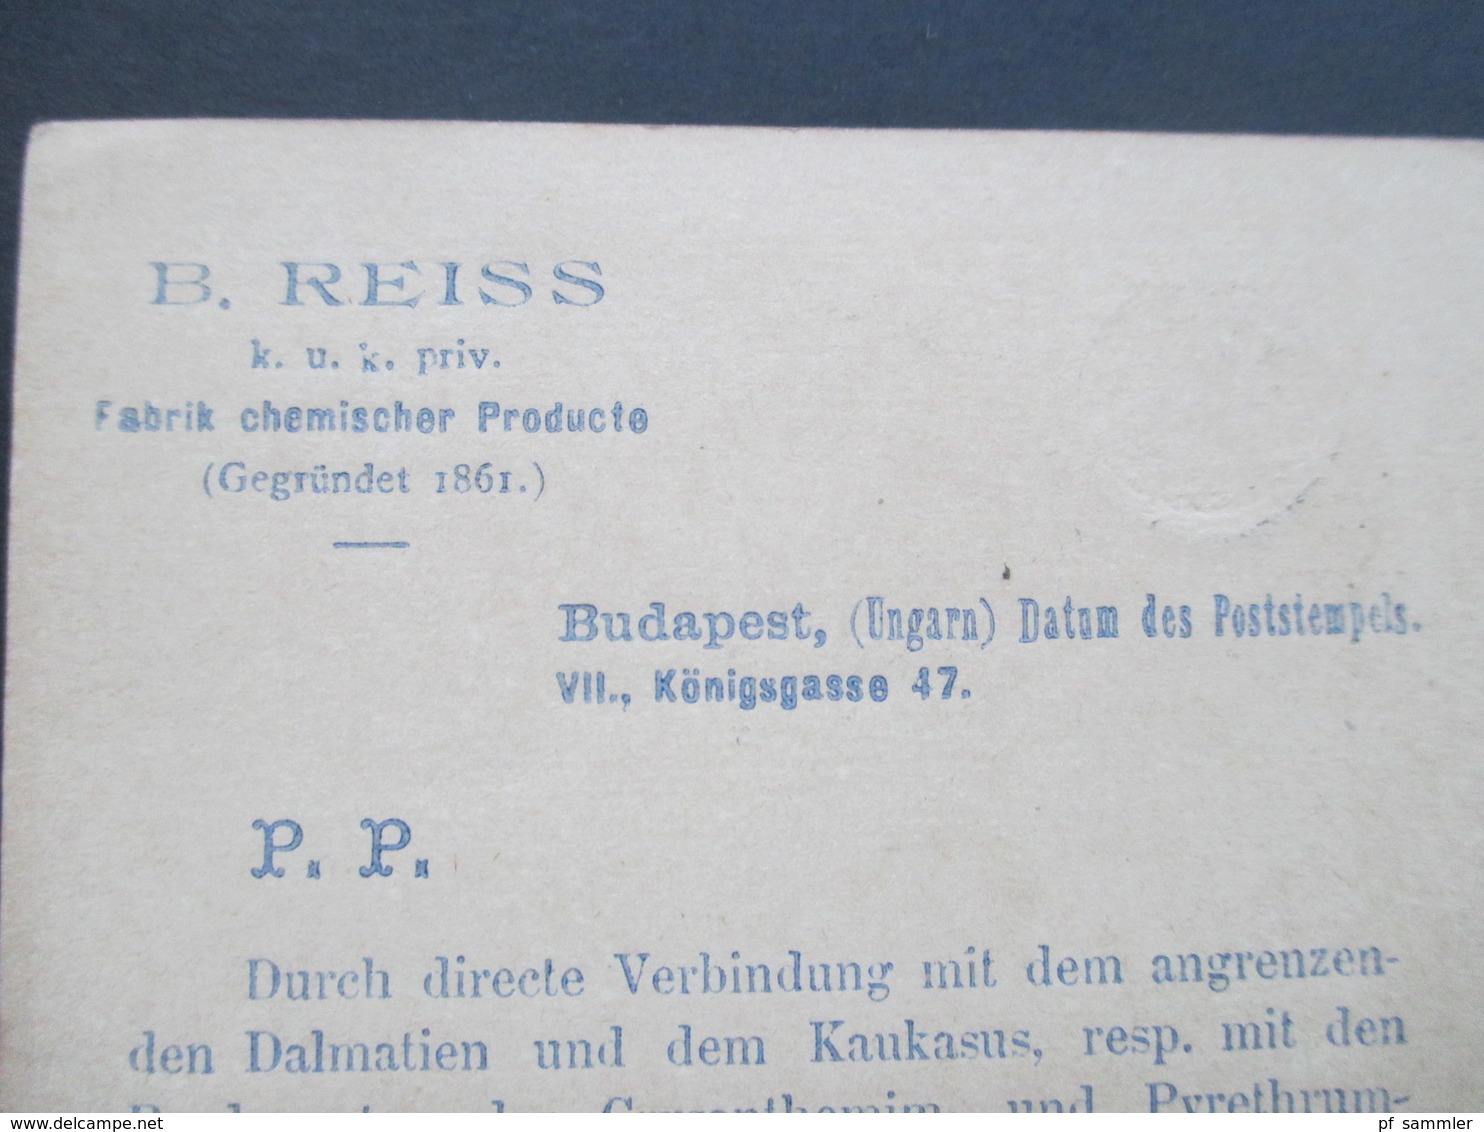 Ungarn 1889 Ganzsache Firmenwerbung! B. Reiss KuK Priv. Fabrik Chemischer Producte. Ungefärbtes Insectenpulver - Covers & Documents